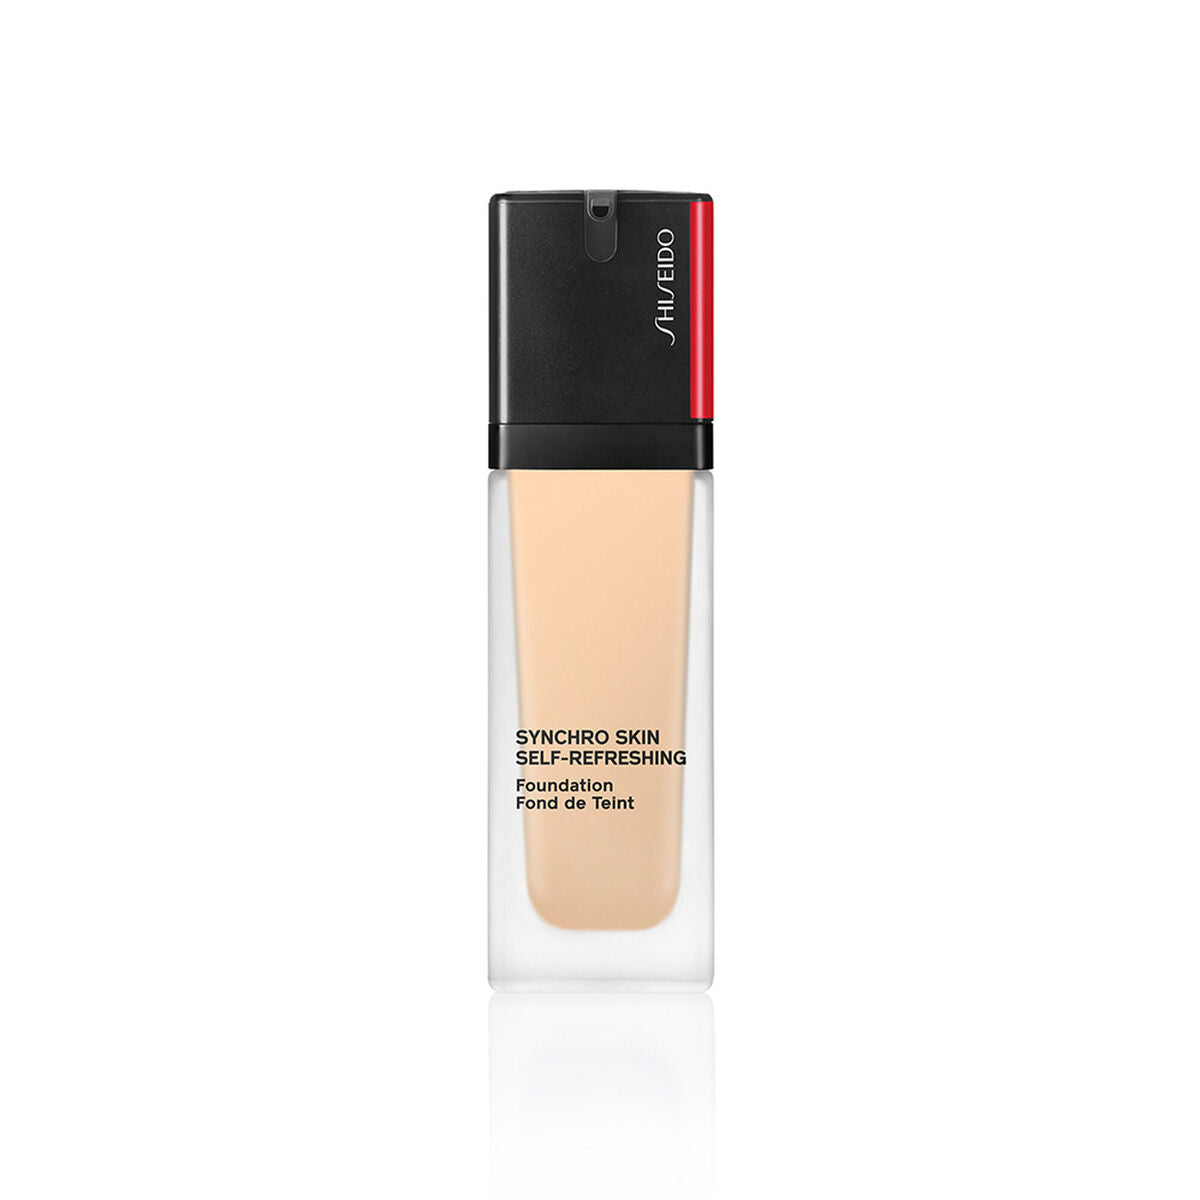 Kaufe Fluid Makeup Basis Synchro Skin Self-Refreshing Shiseido bei AWK Flagship um € 53.00